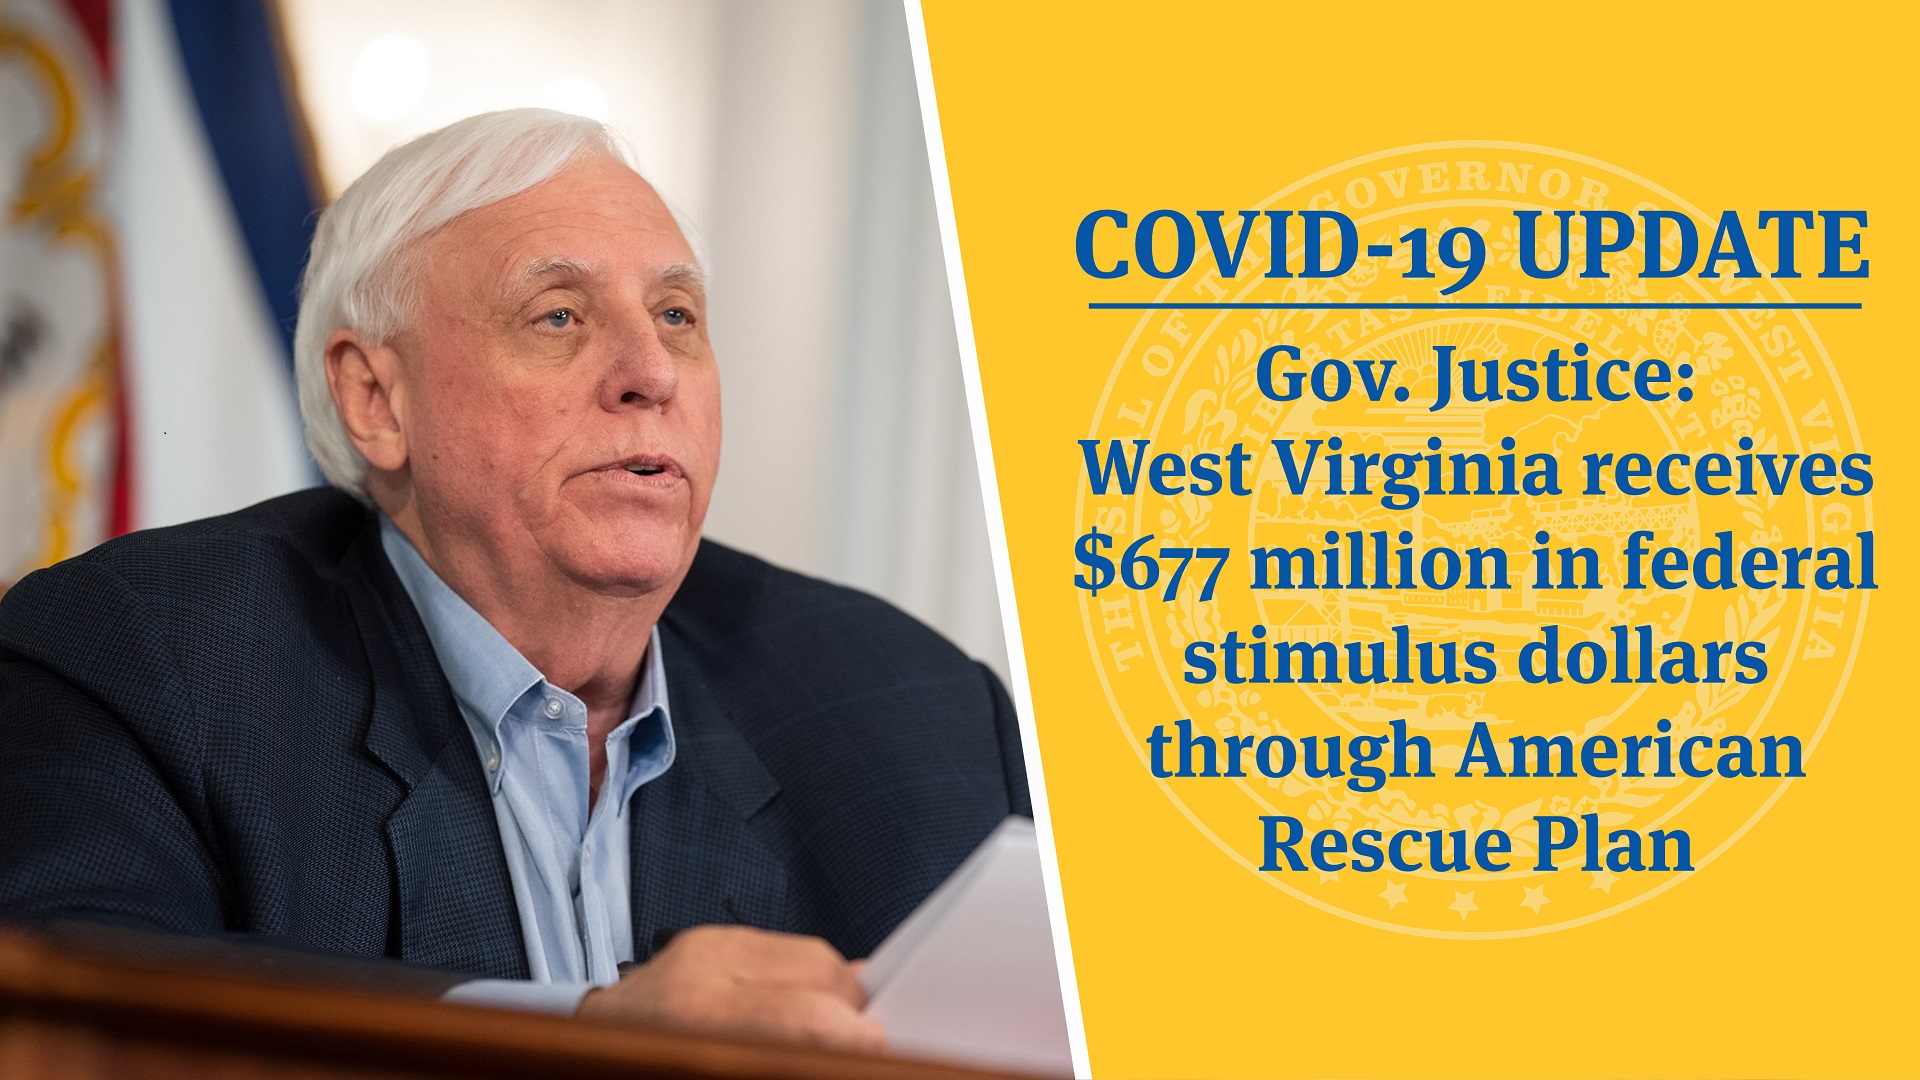 COVID19 UPDATE Gov. Justice West Virginia receives 677 million in